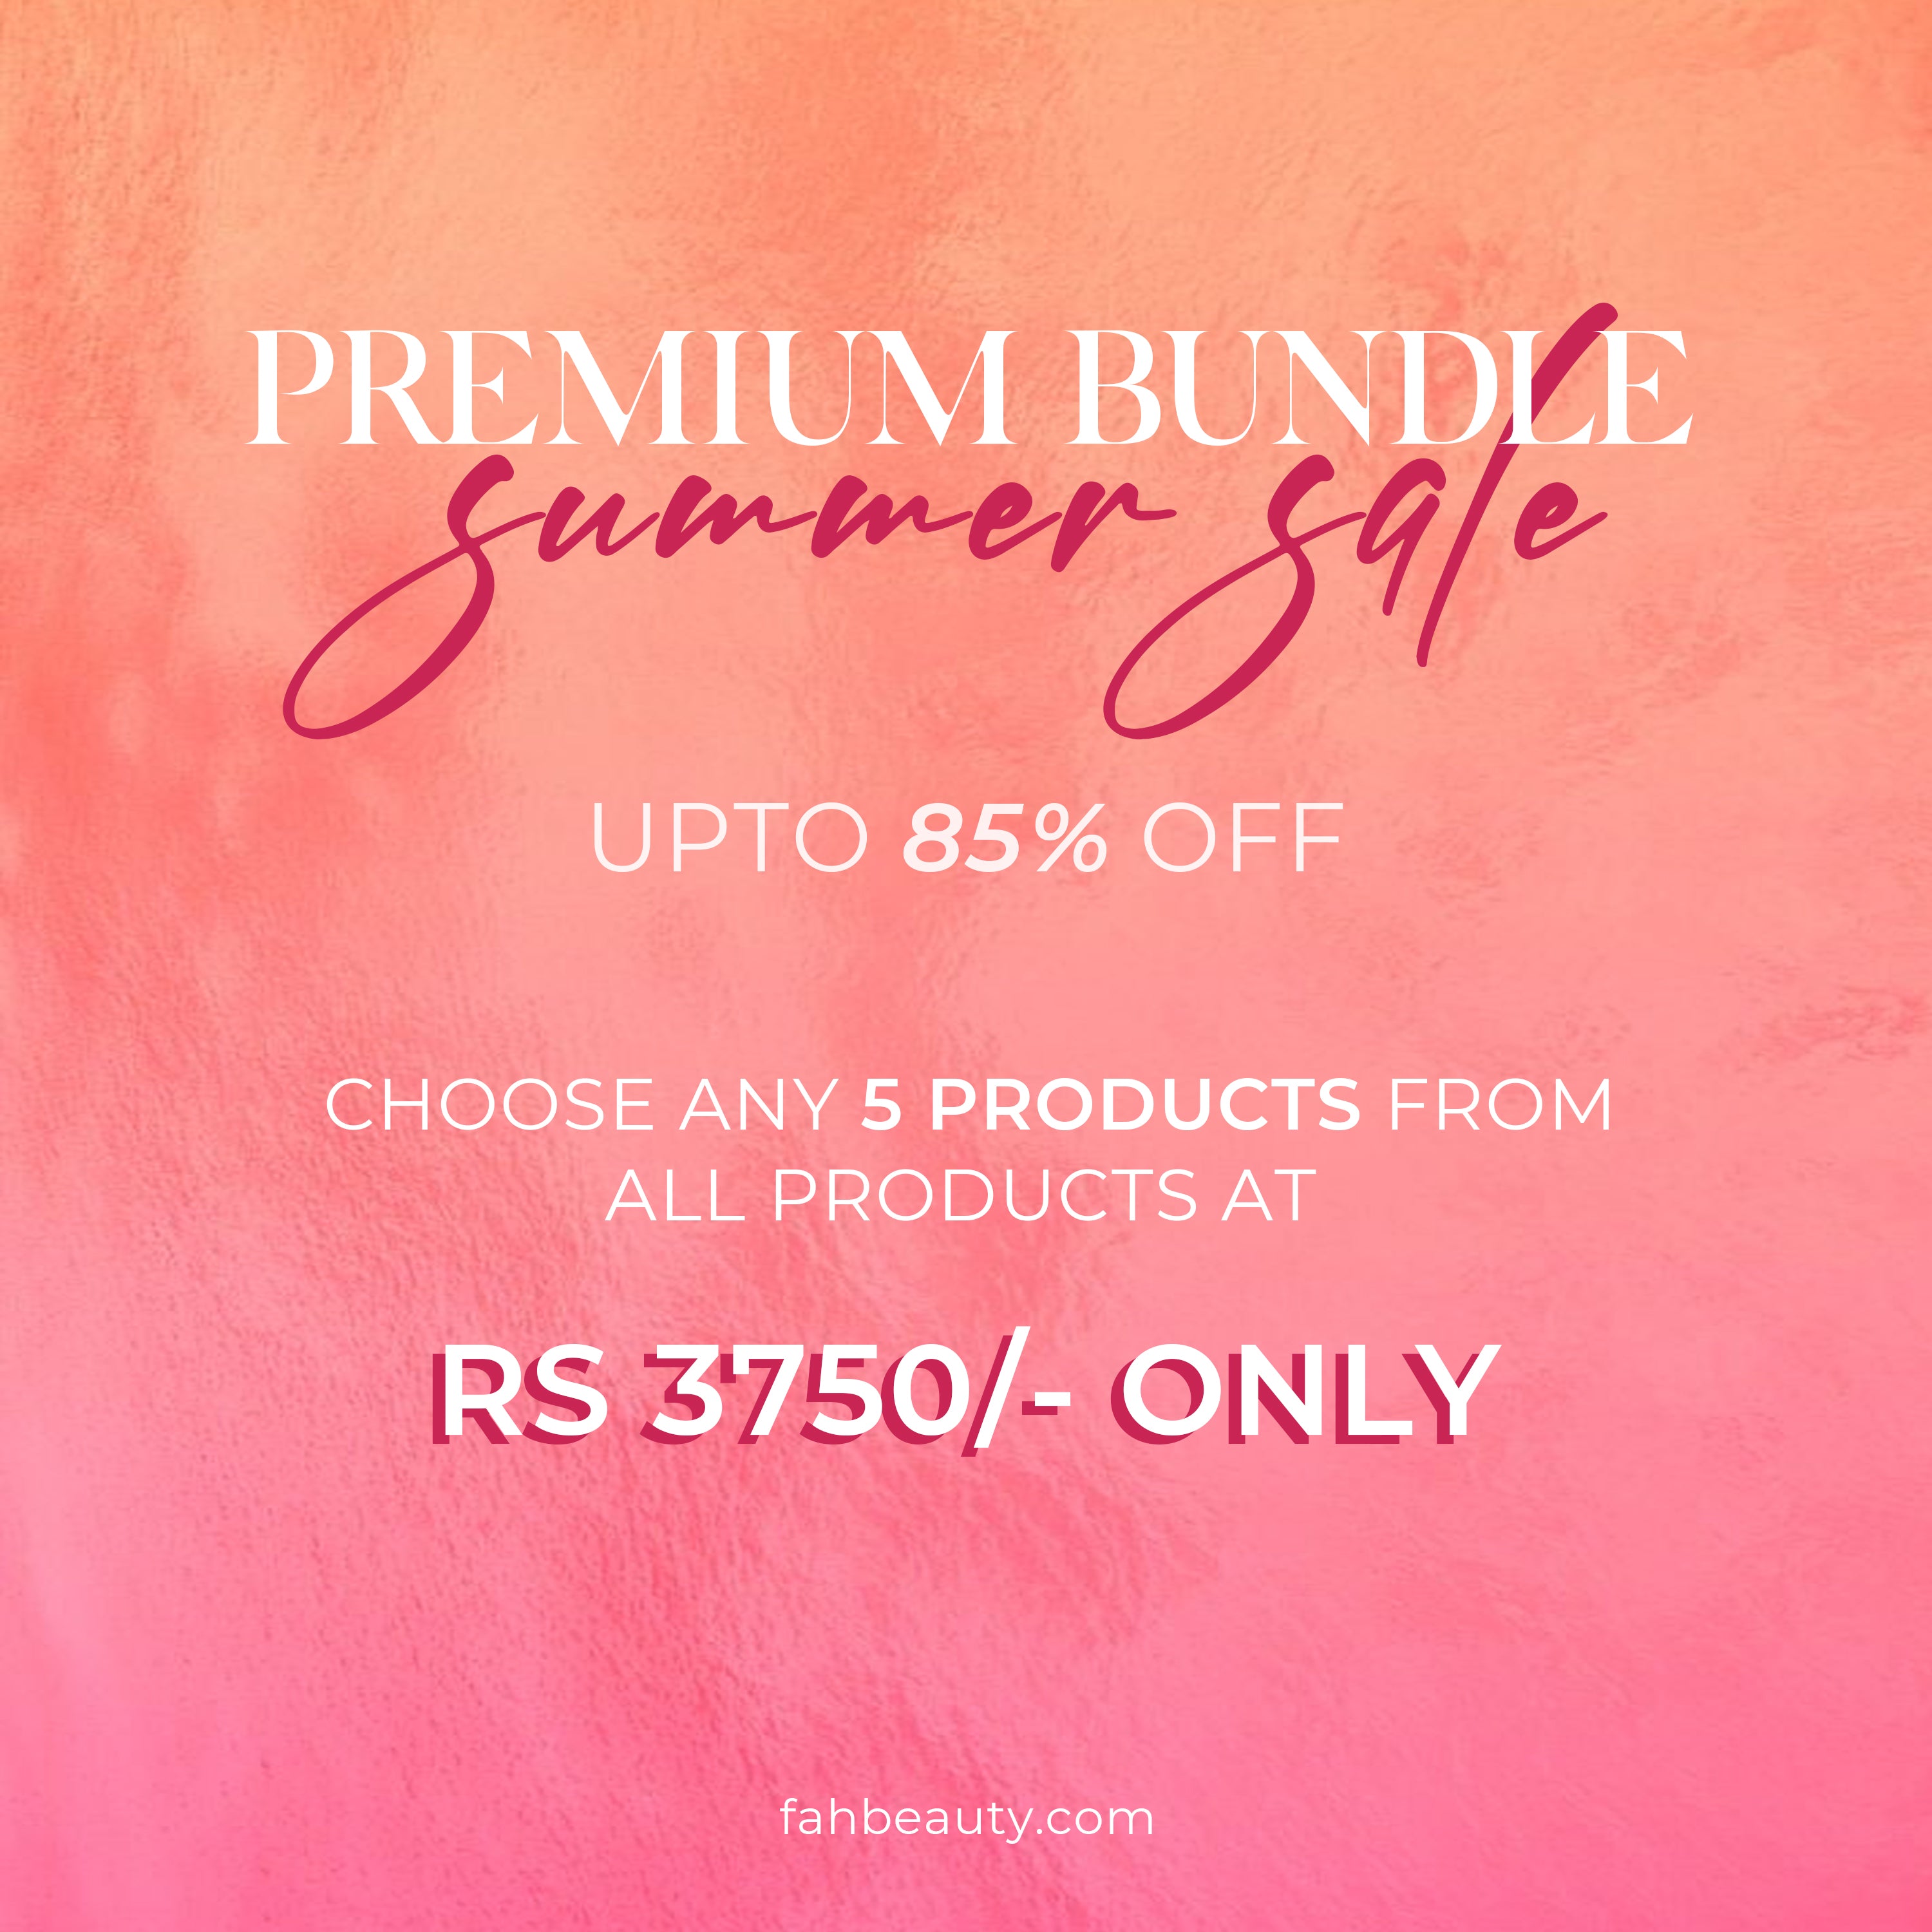 Summer Sale Upto 85% OFF Premium Bundle